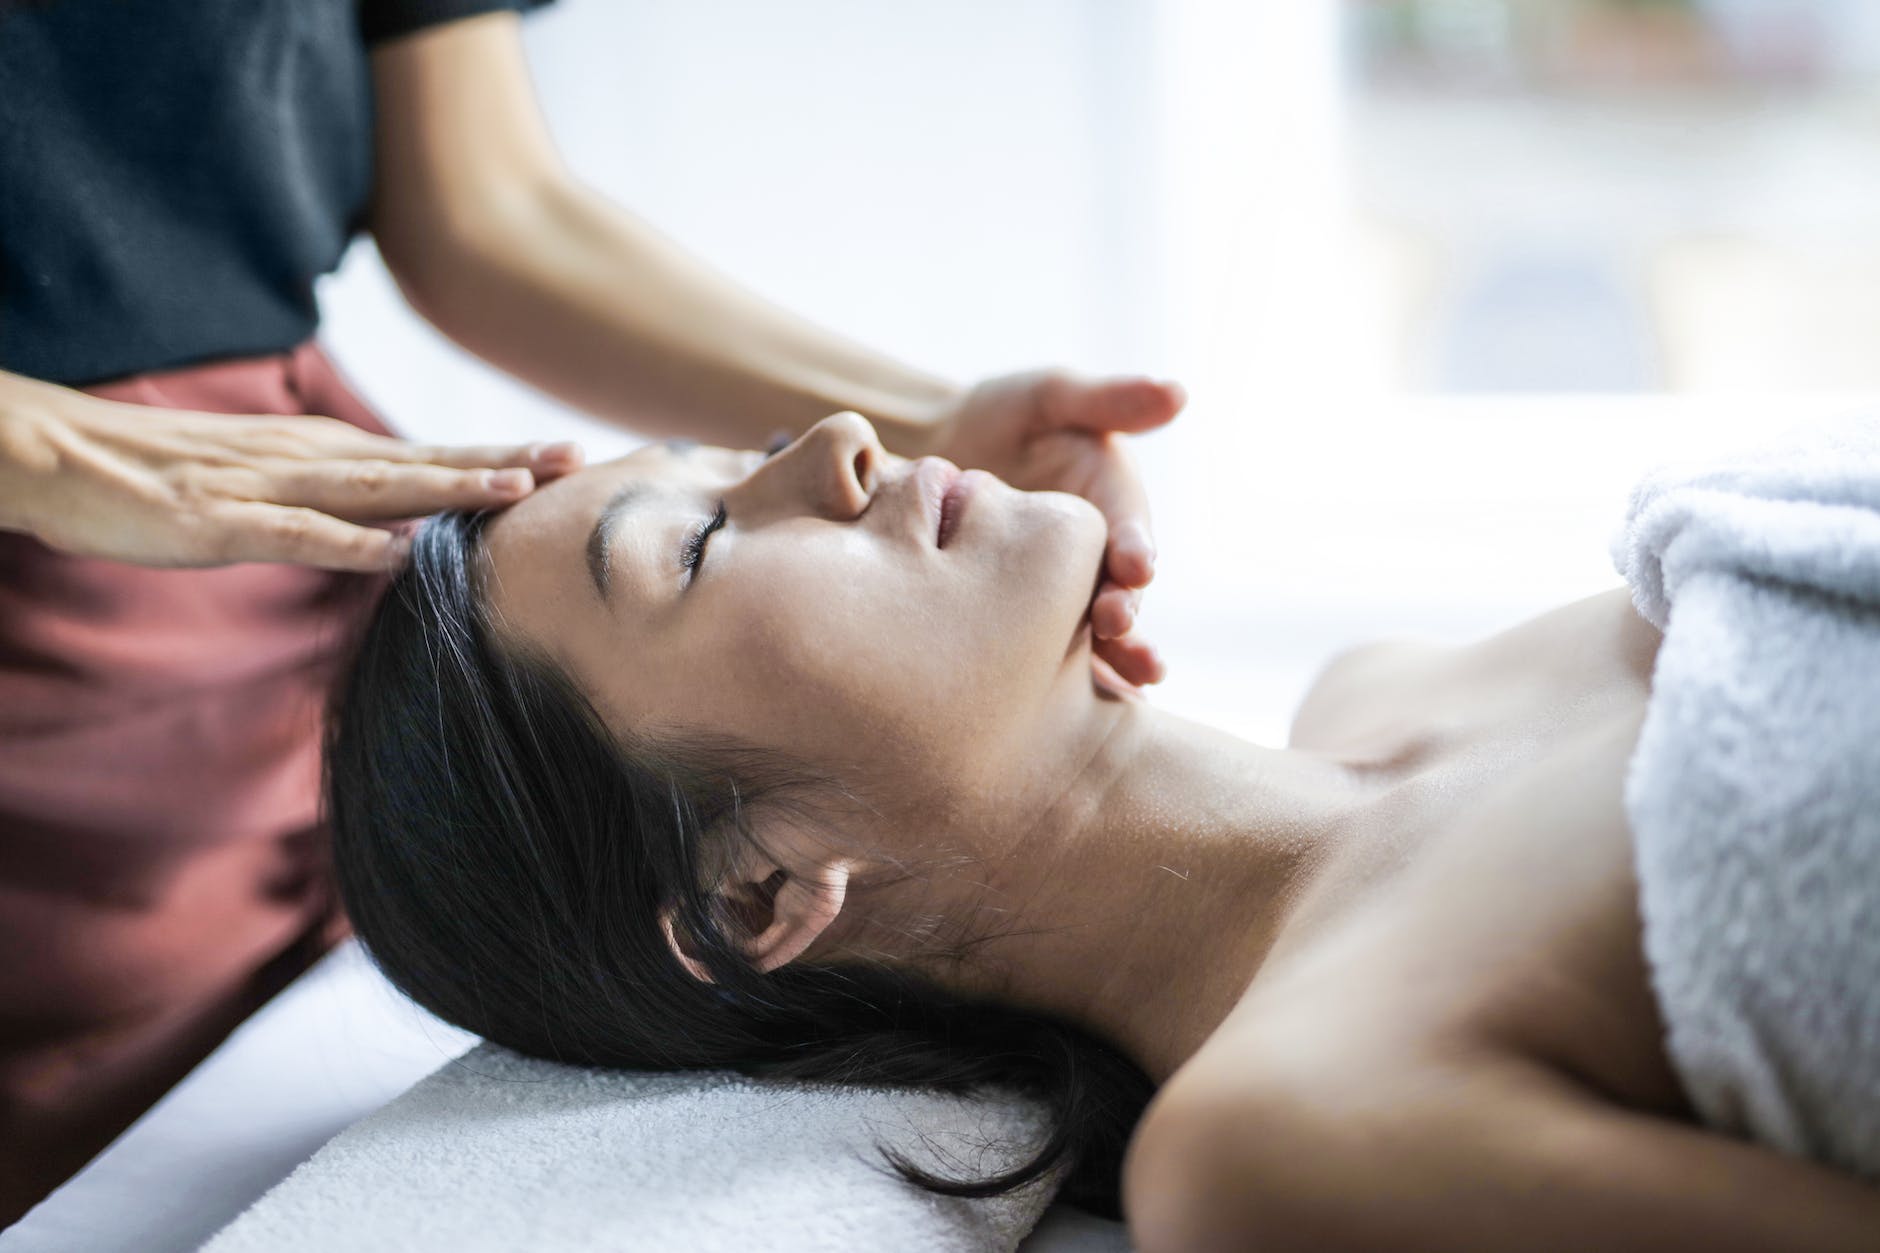 selective focus photo of woman getting a head massage
Pexels.com